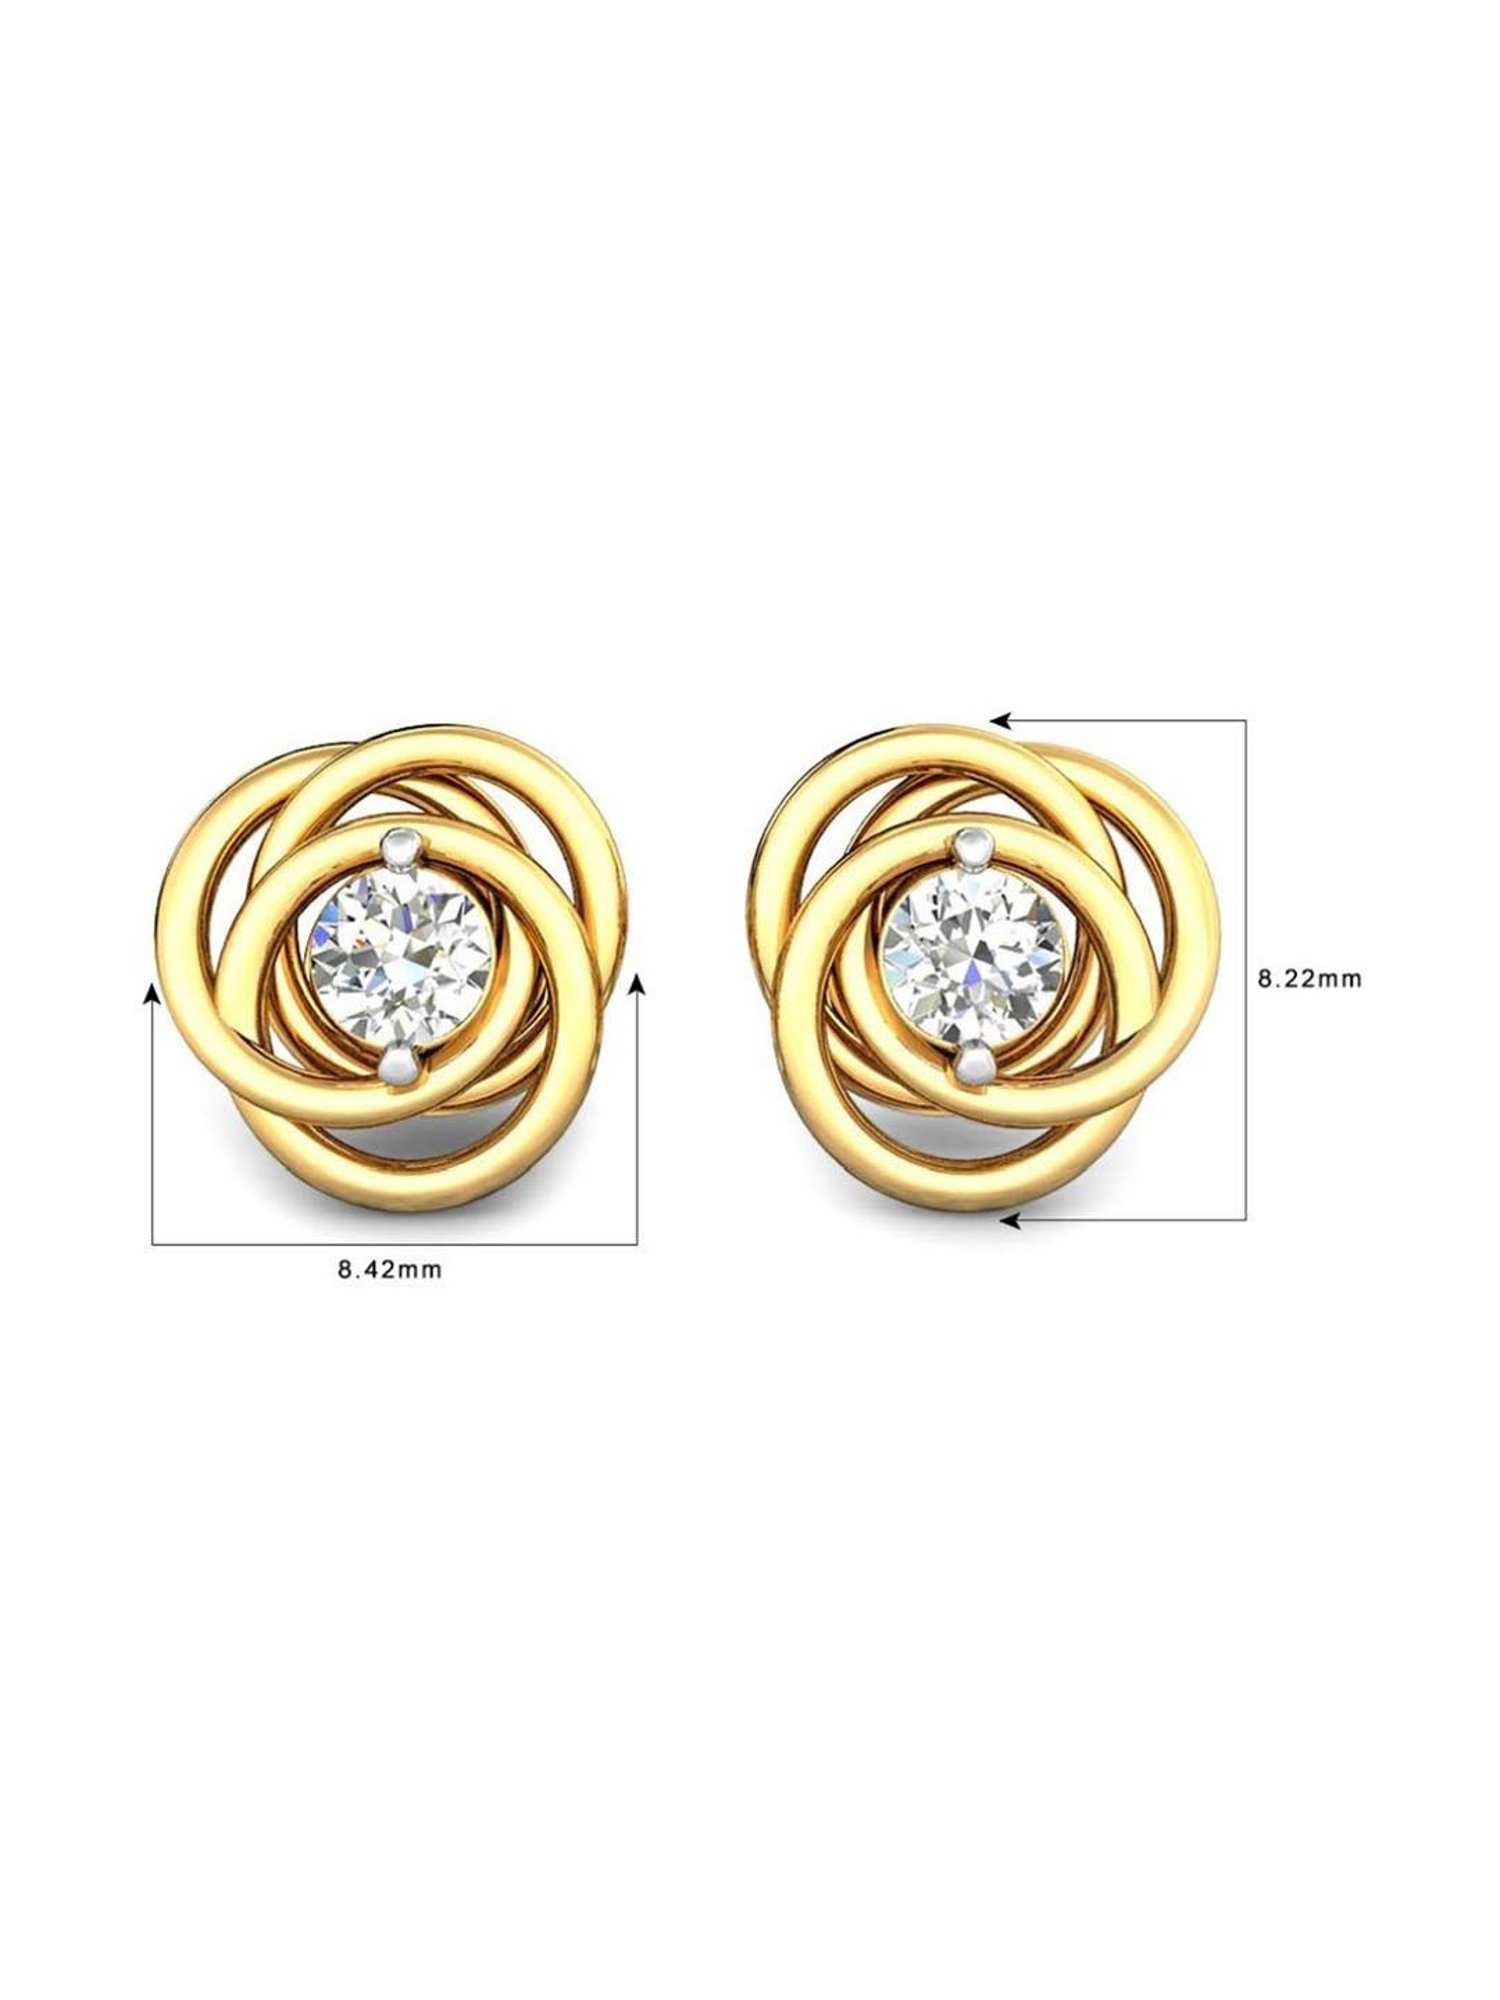 Kalyan Jewellers Earrings Designs  Jewellery Designs